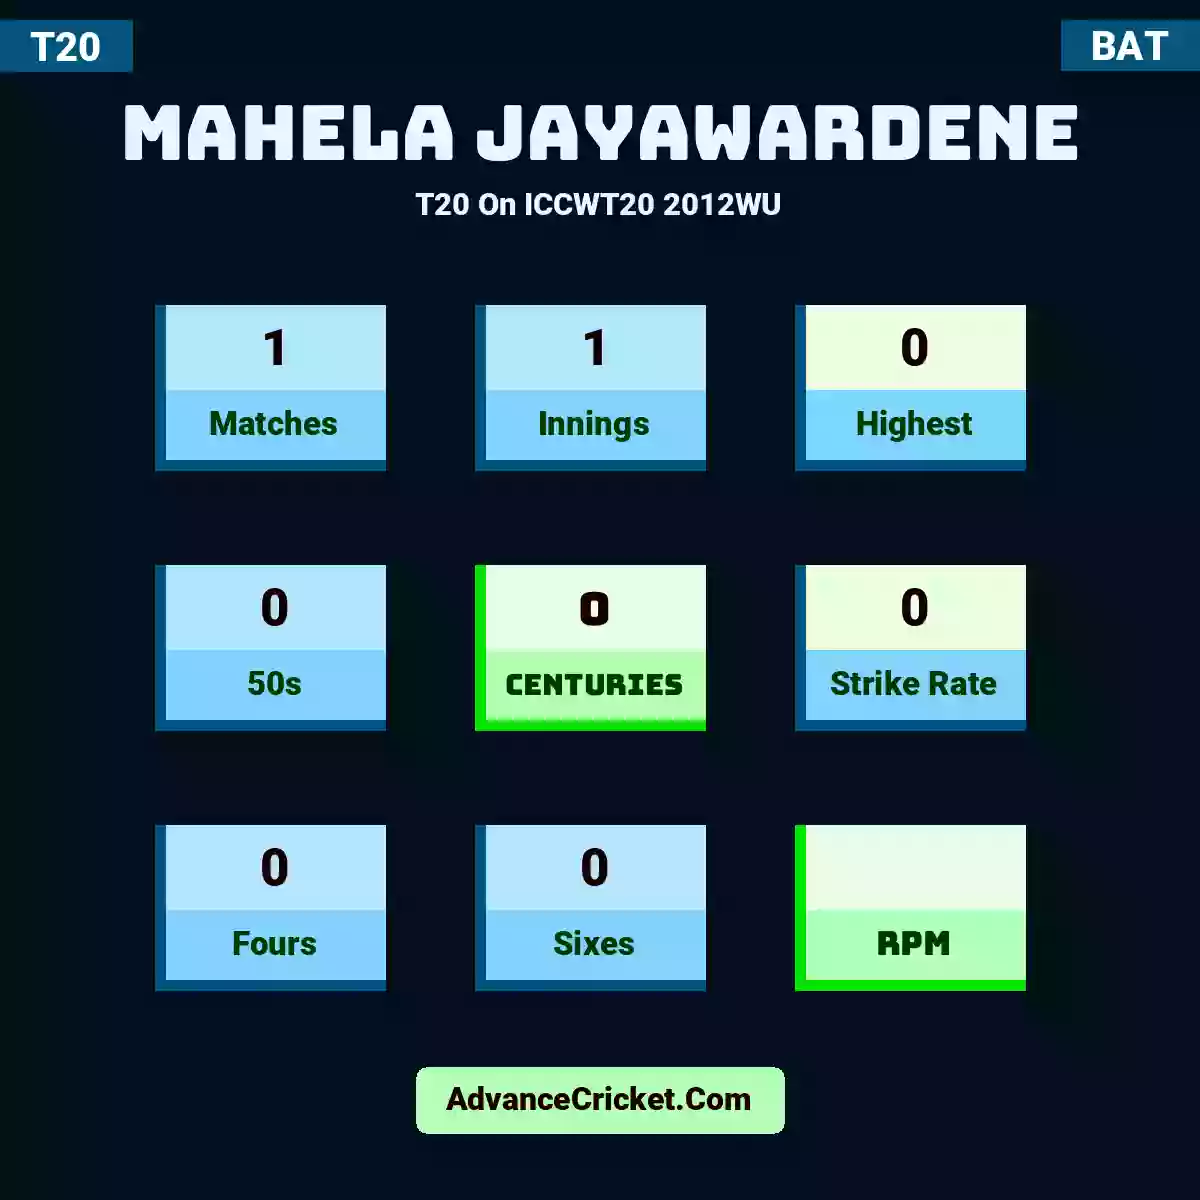 Mahela Jayawardene T20  On ICCWT20 2012WU, Mahela Jayawardene played 1 matches, scored 0 runs as highest, 0 half-centuries, and 0 centuries, with a strike rate of 0. M.Jayawardene hit 0 fours and 0 sixes.